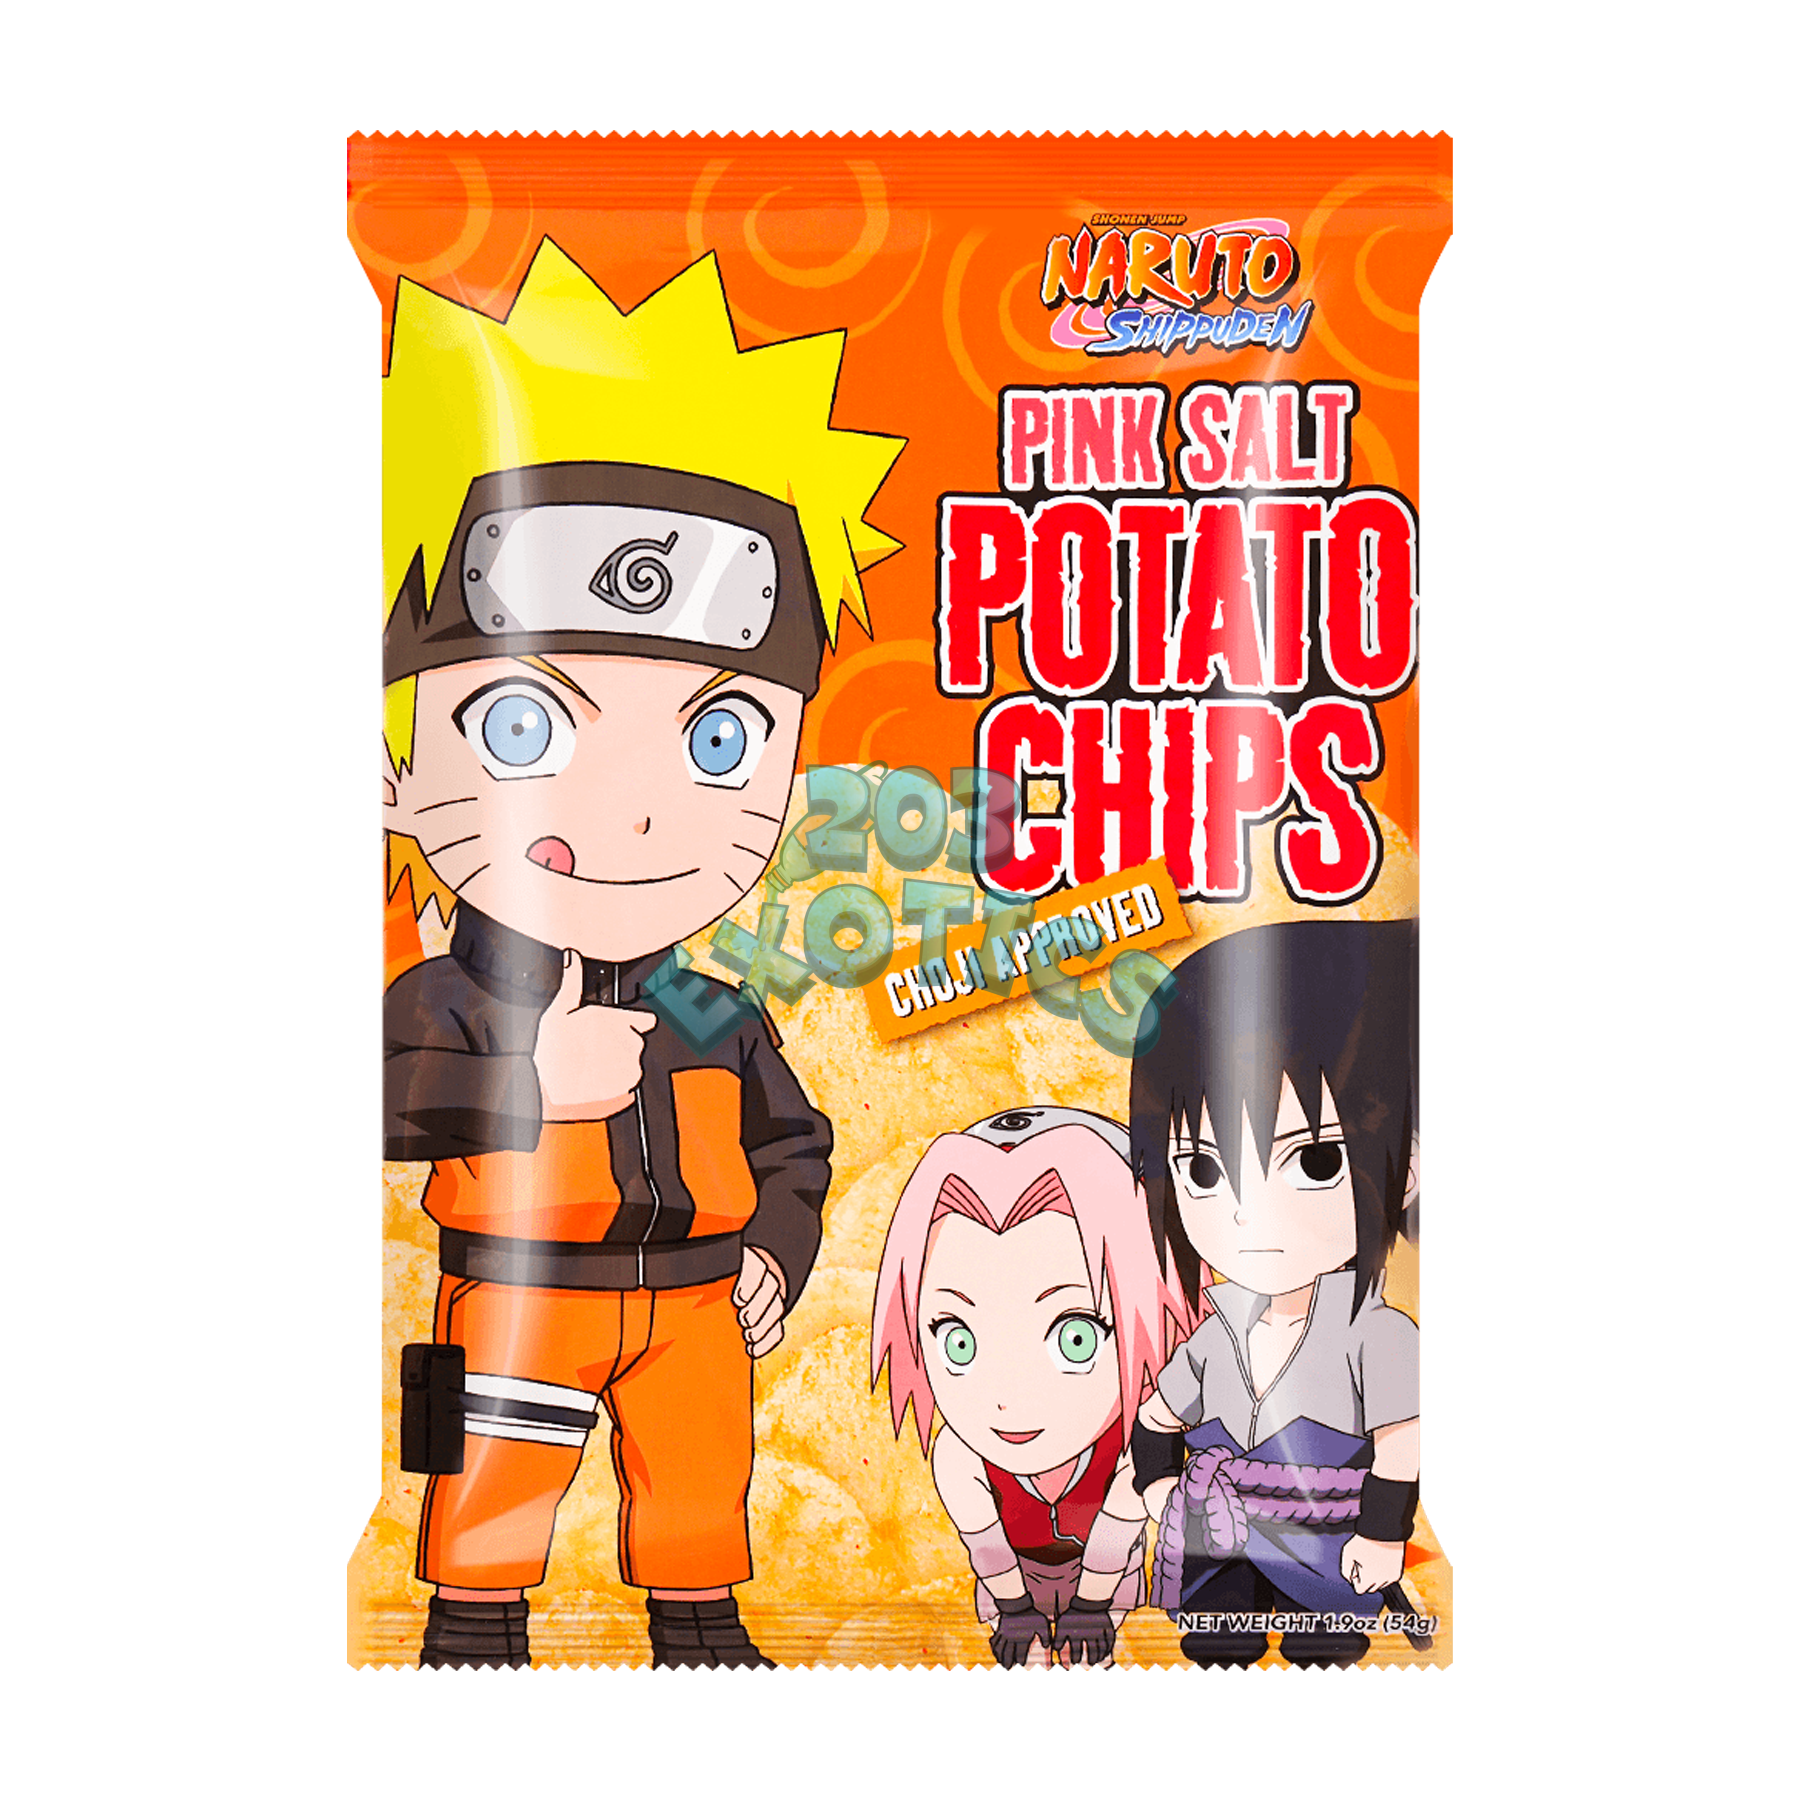 Naruto Shippuden Pink Salt Potato Chips (54G)